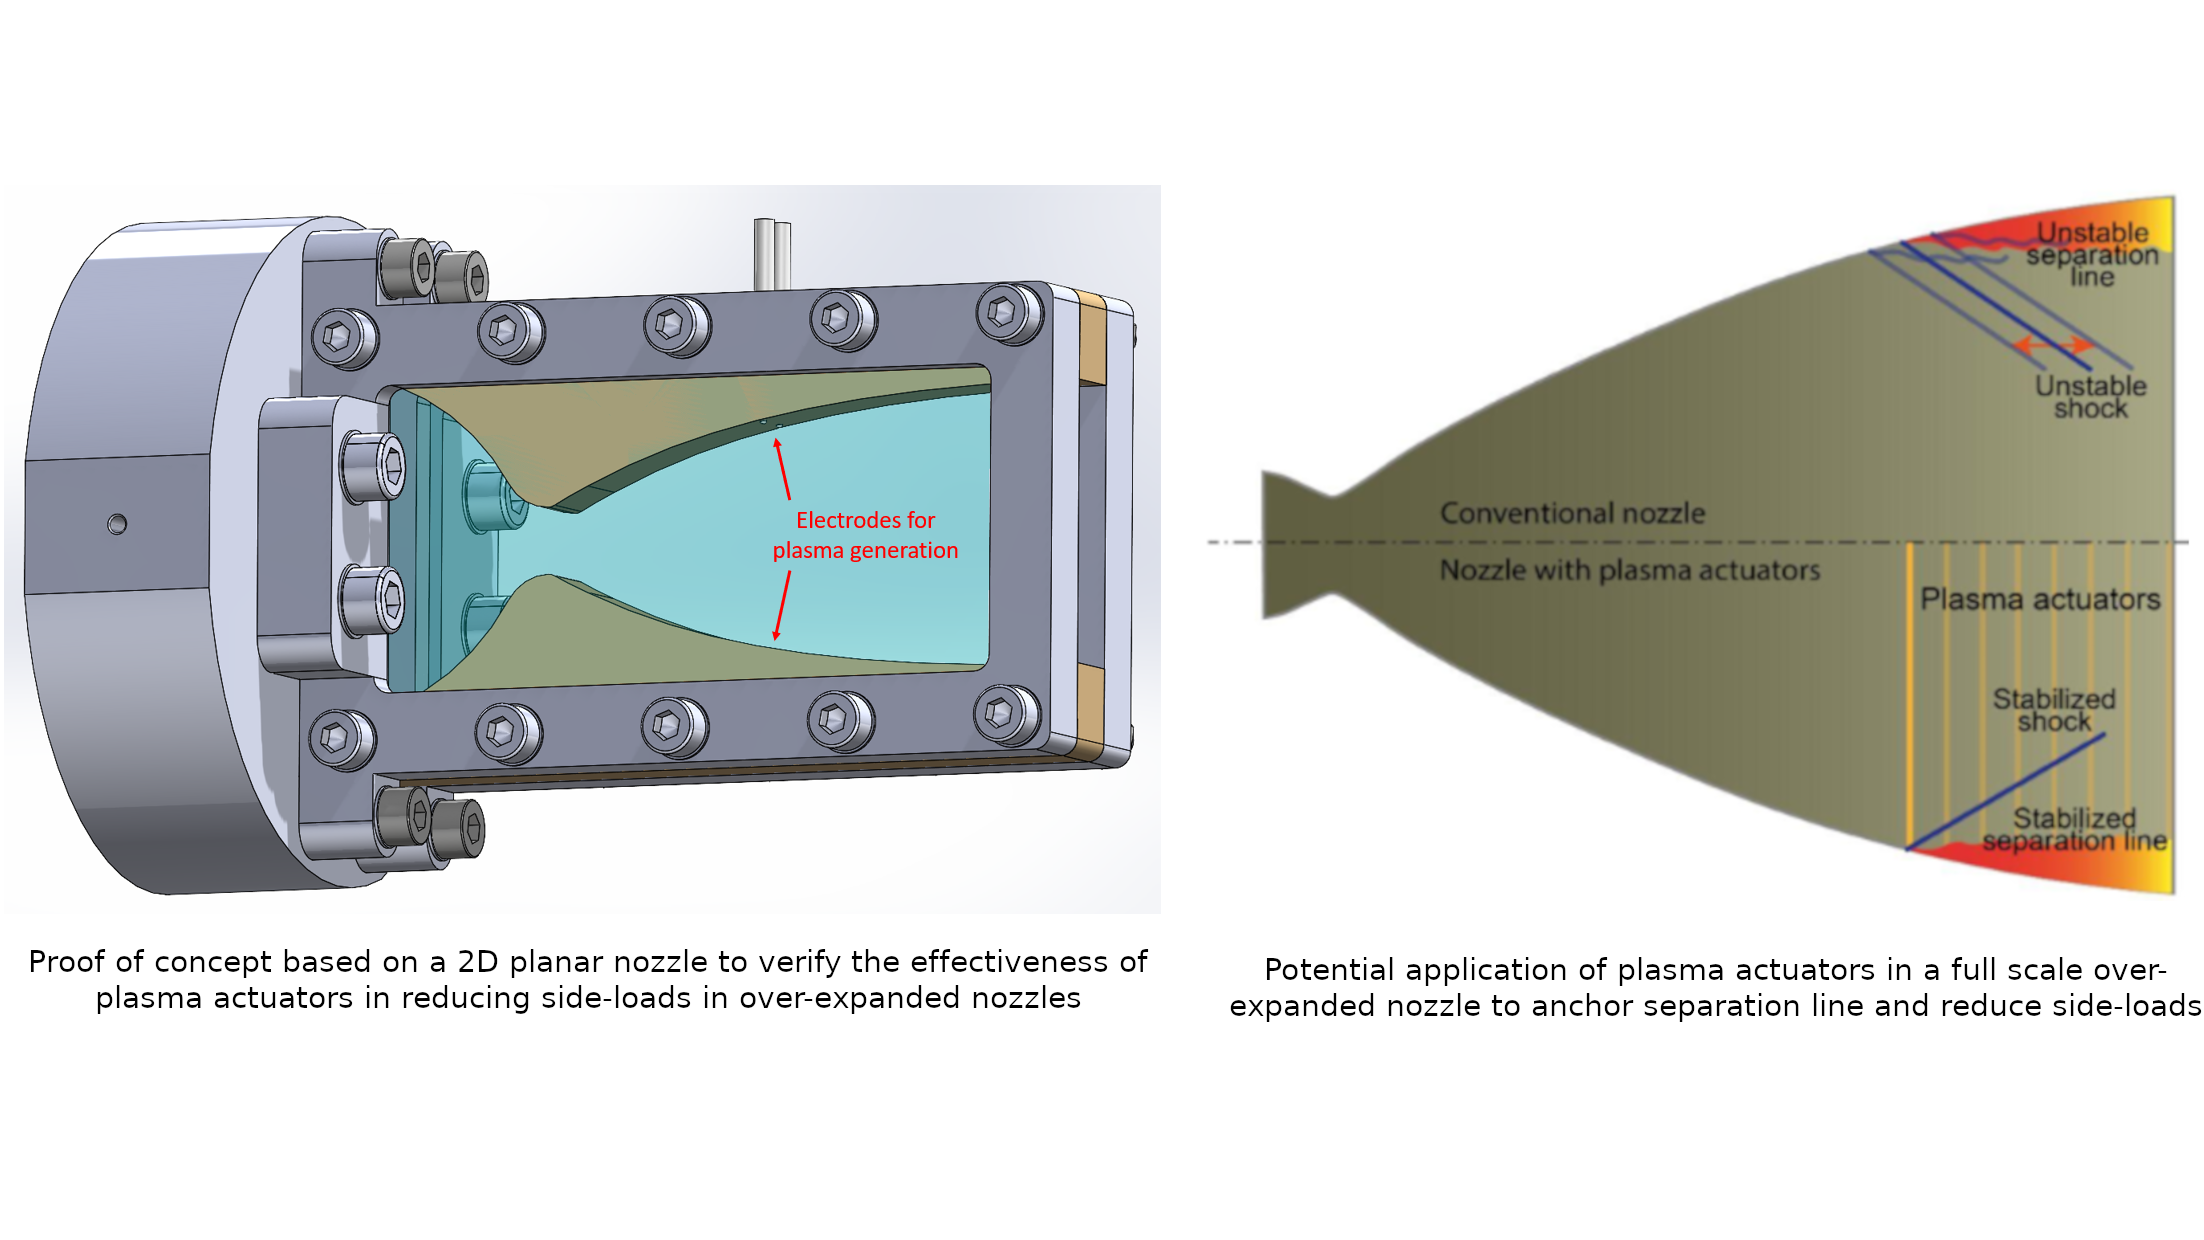 Plasma Actuators for Separation Control in Over-Expanded Rocket Nozzles (PARSEC)